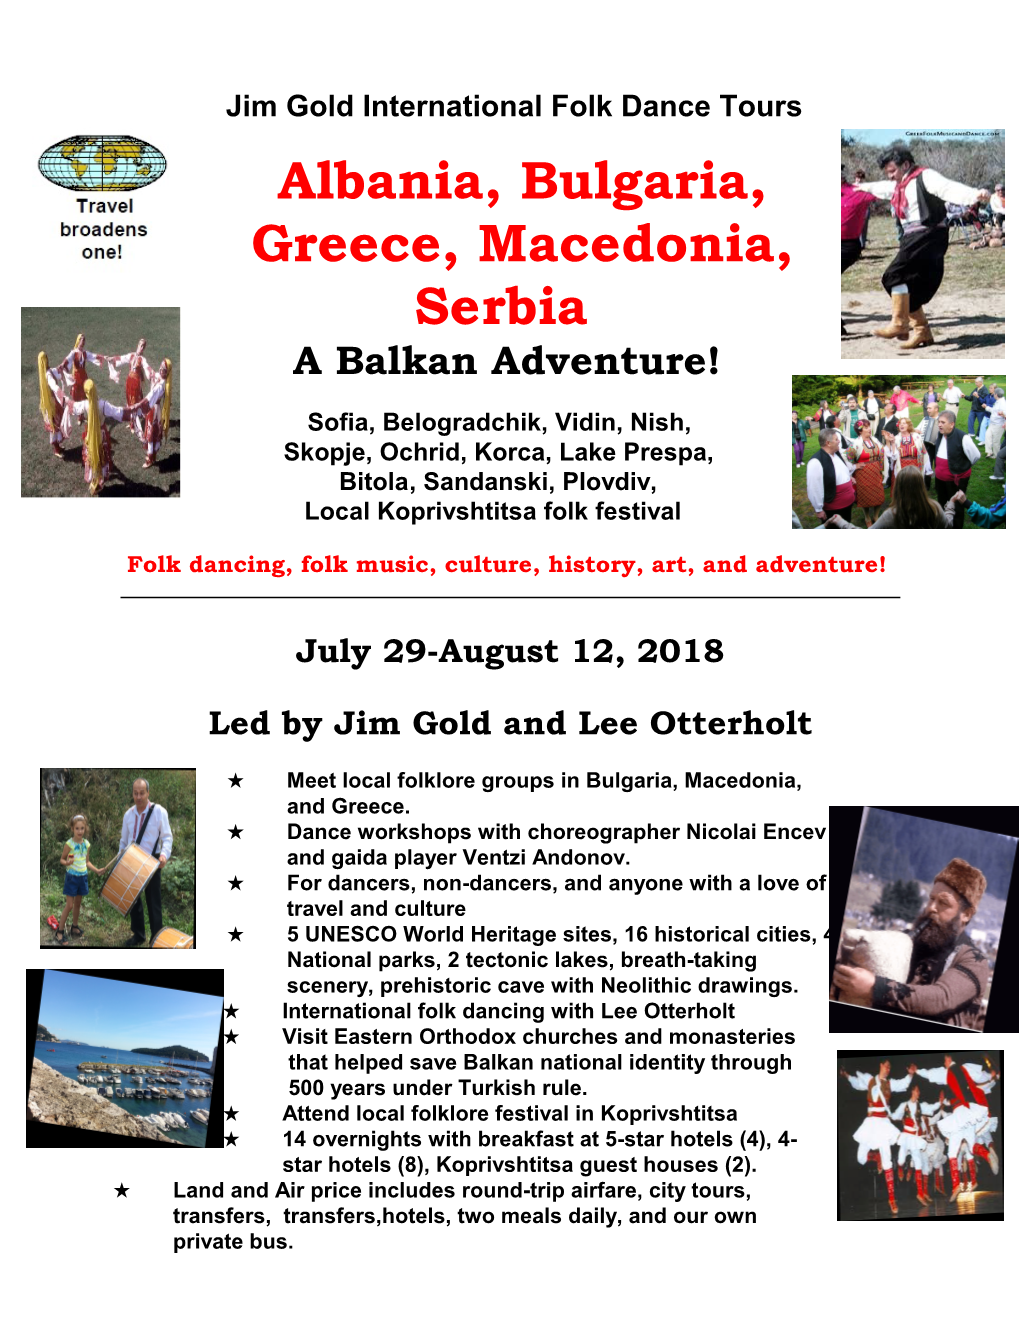 Albania, Bulgaria, Greece, Macedonia, Serbia a Balkan Adventure!